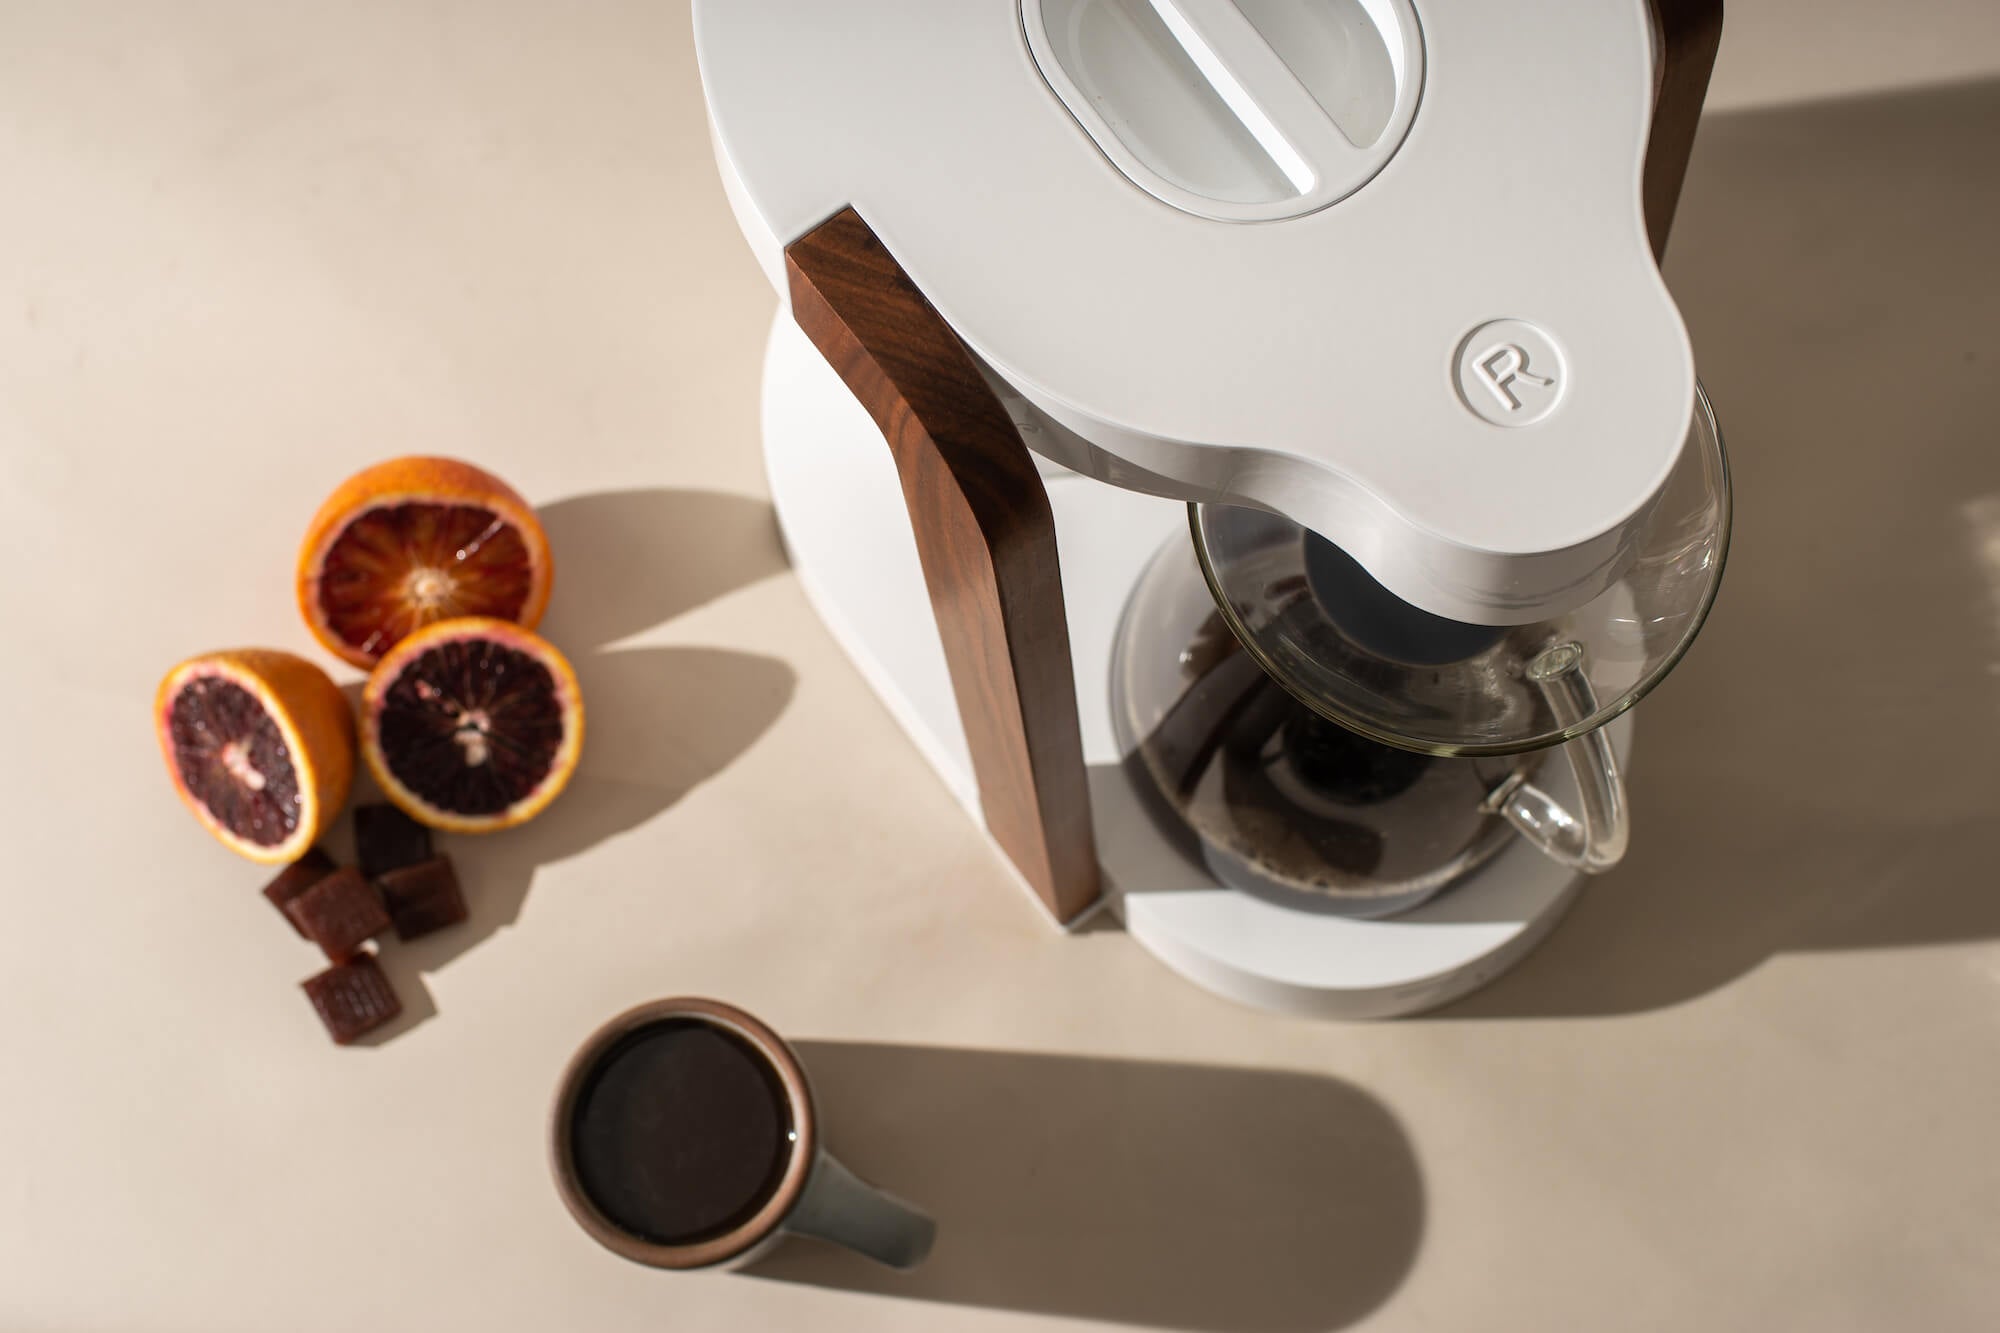 Eureka Espresso Grinder Overviews – Clive Coffee